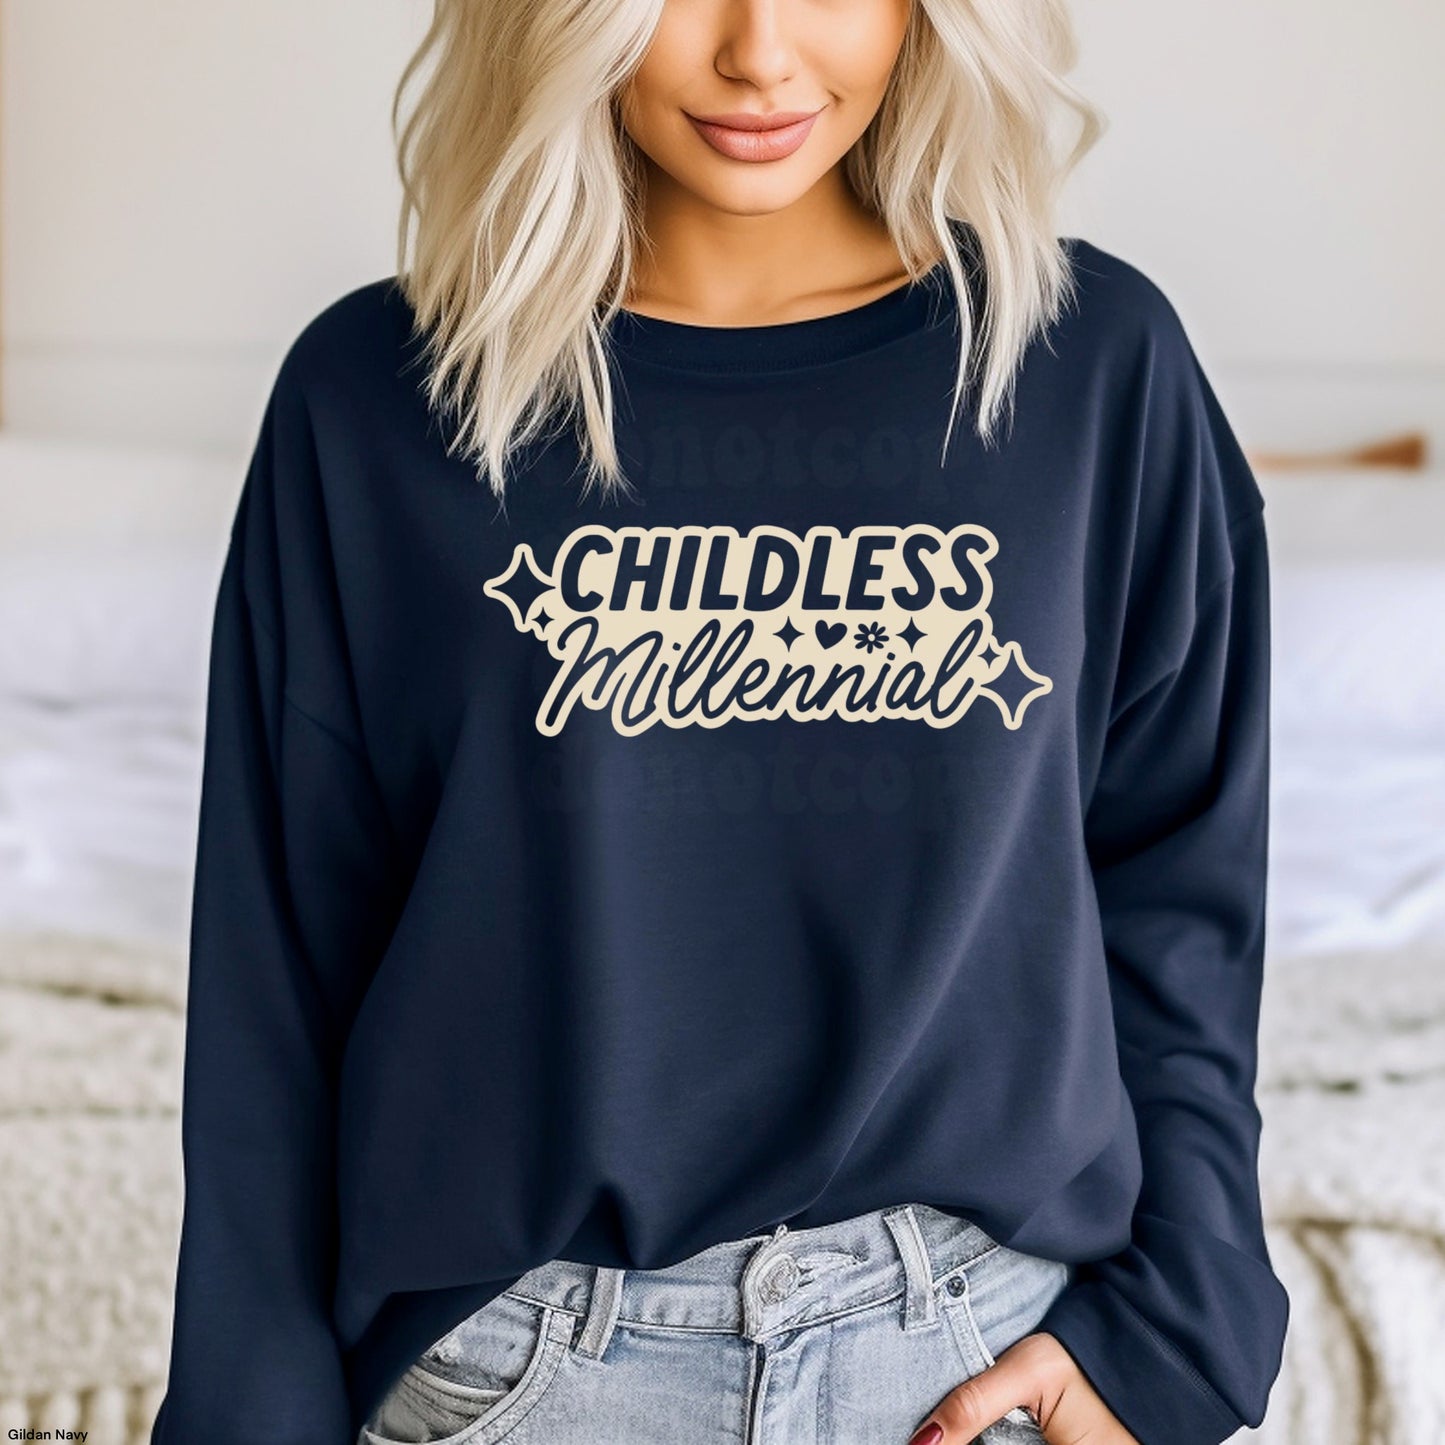 Childless Millennial